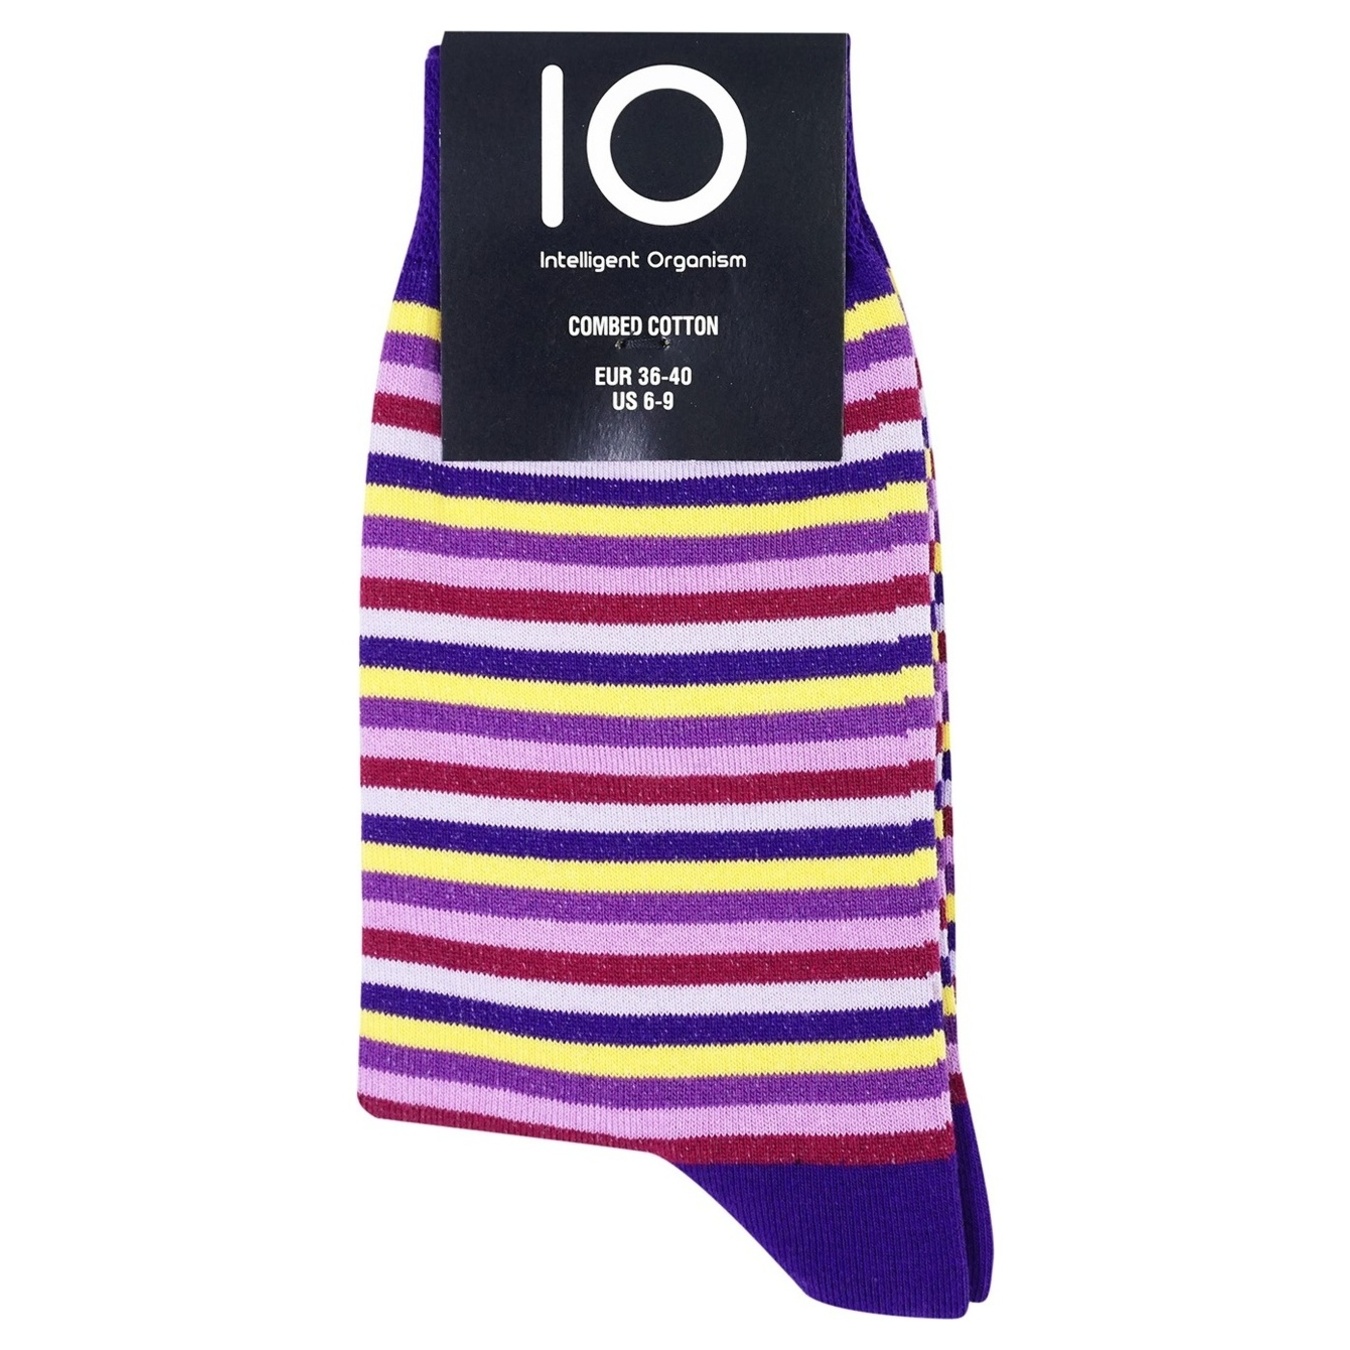 IO socks for women, purple, 36-40 years old.